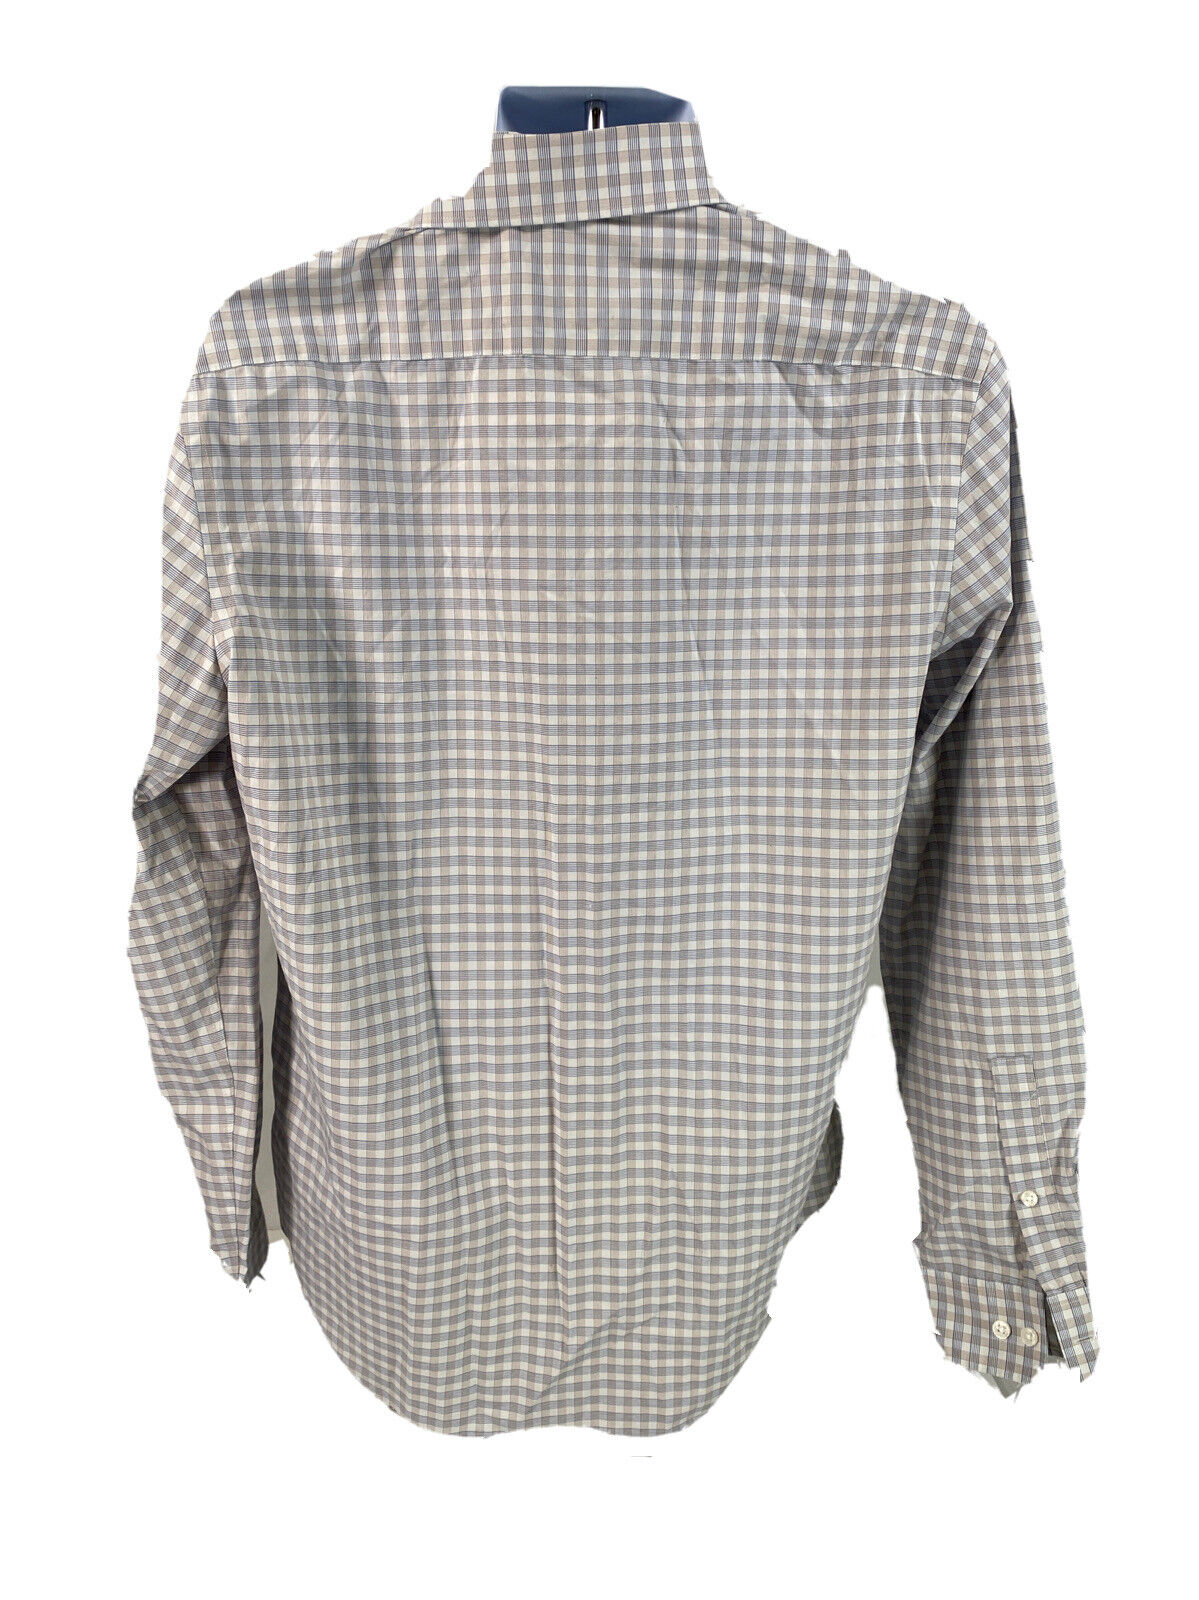 Michael Kors Men's Blue/Gray Slim Fit Airsoft Button Up Dress Shirt-34/35